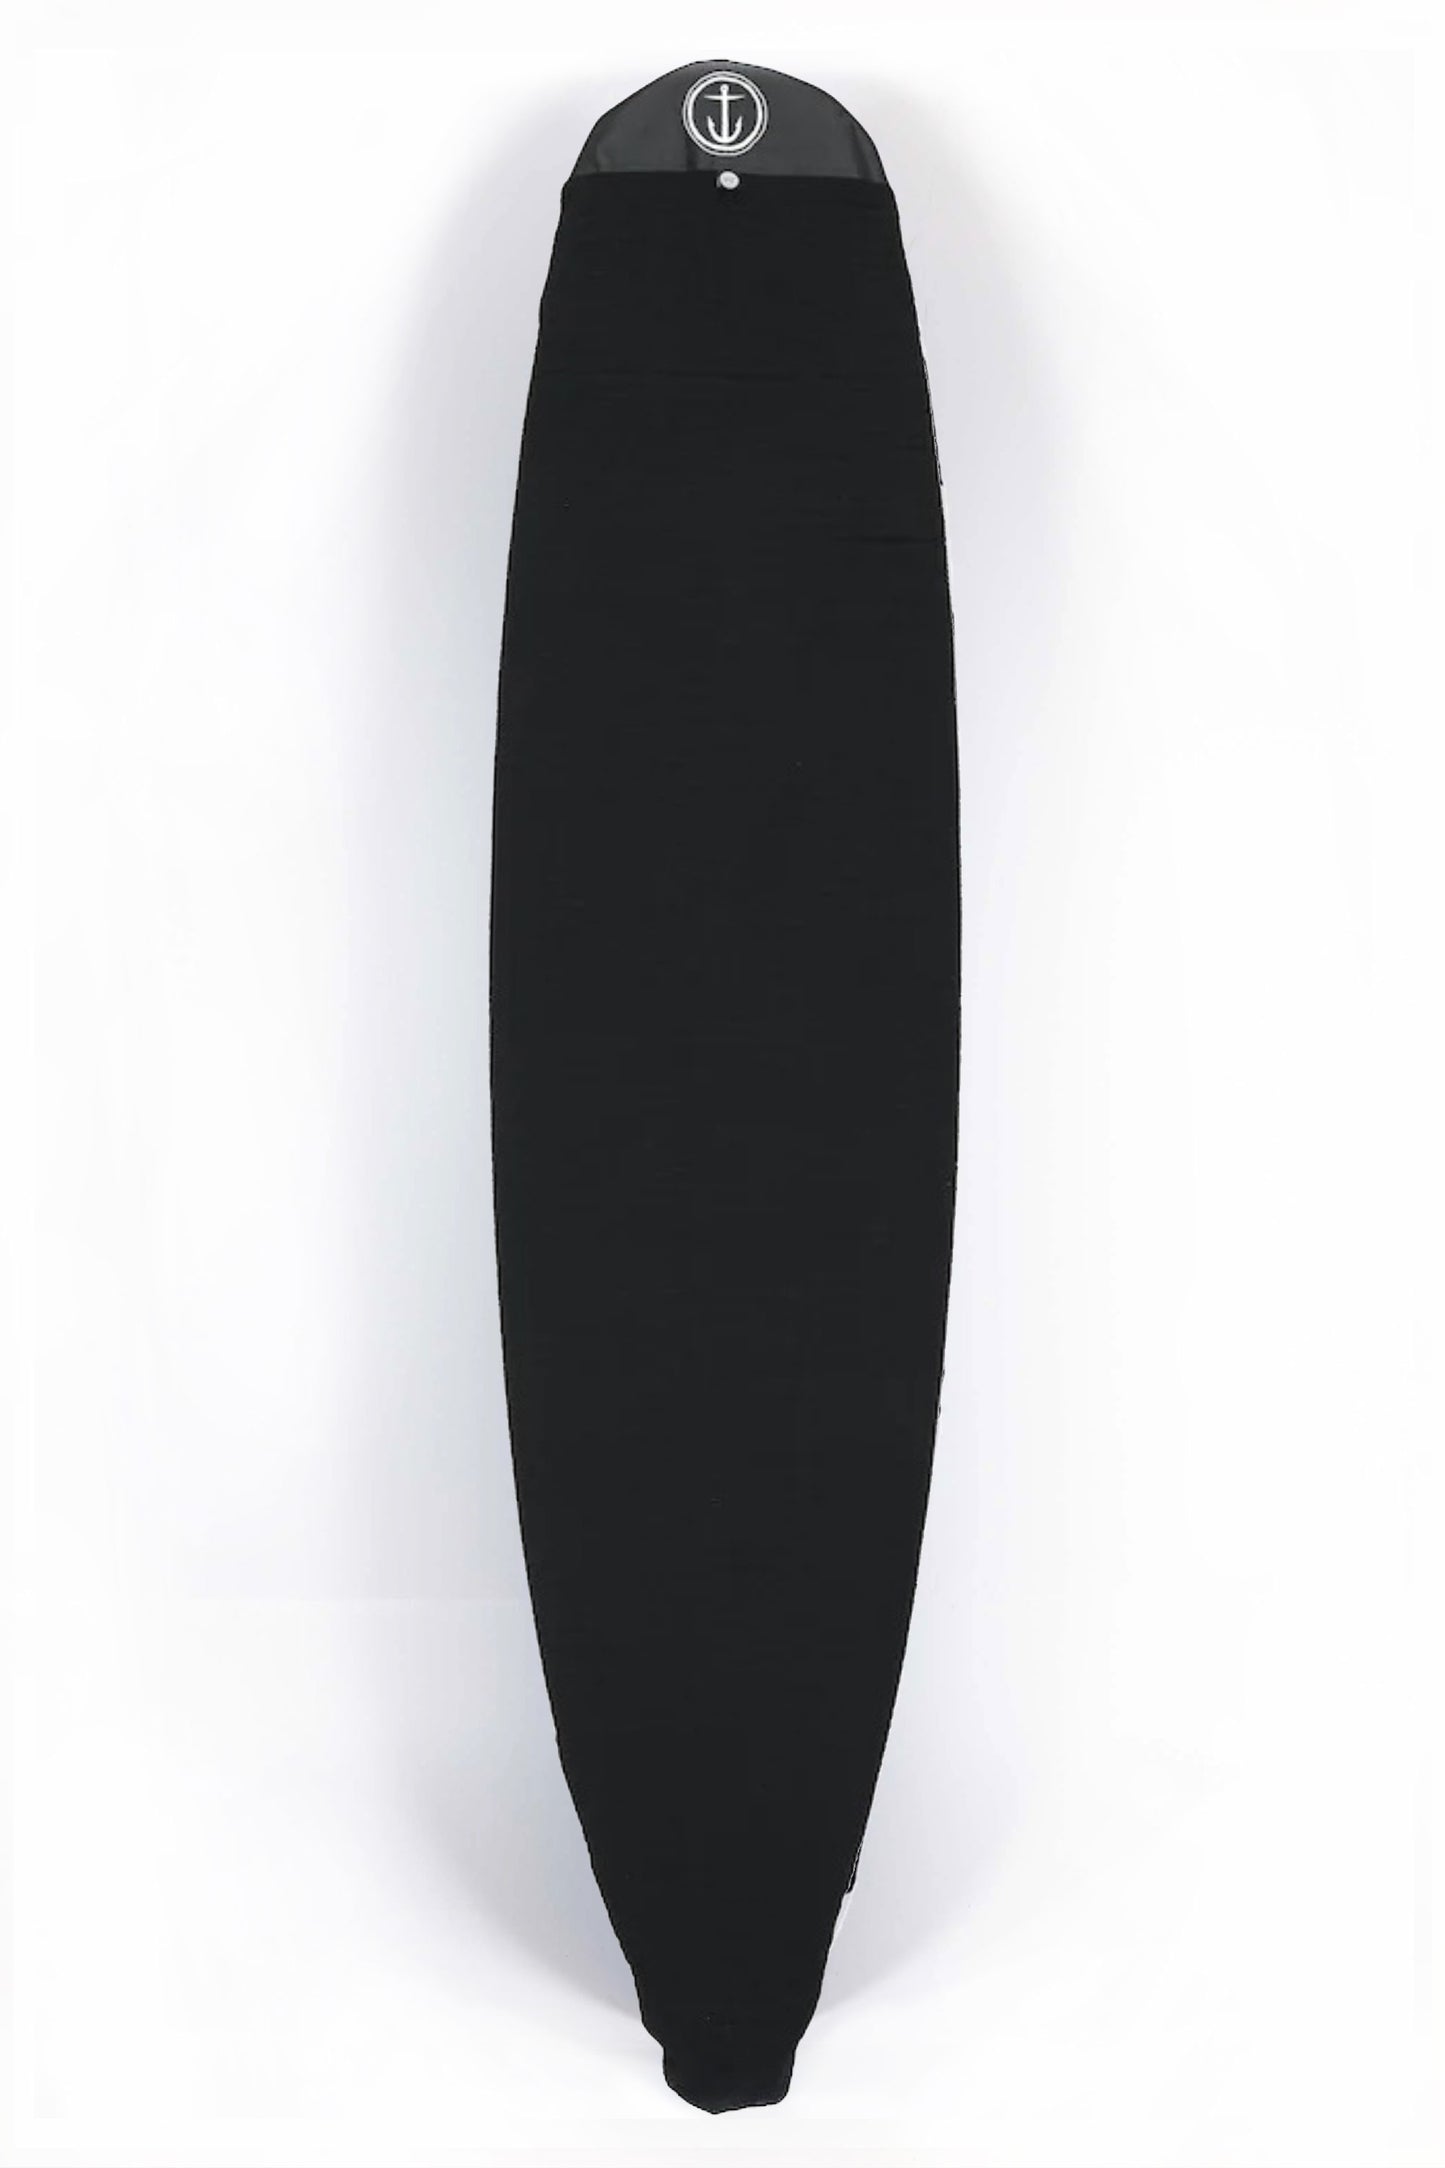 pukas-surf-shop-captain-fin-boardbag-sock-9-6-longboard-black